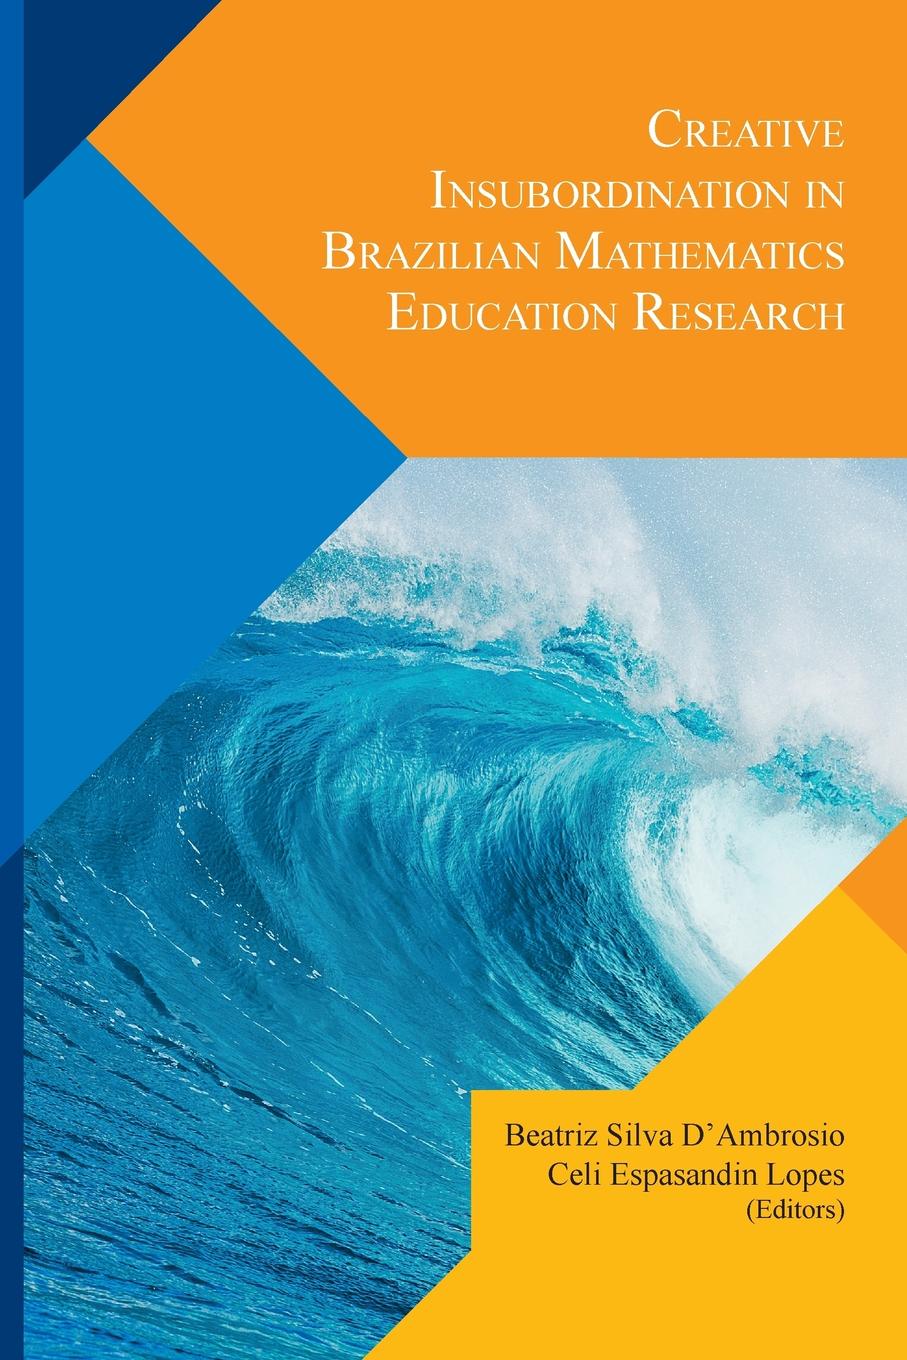 Beatriz Silva D'Ambrosio, Celi Espasandin Lopes Creative Insubordination In Brazilian Mathematics Education Research